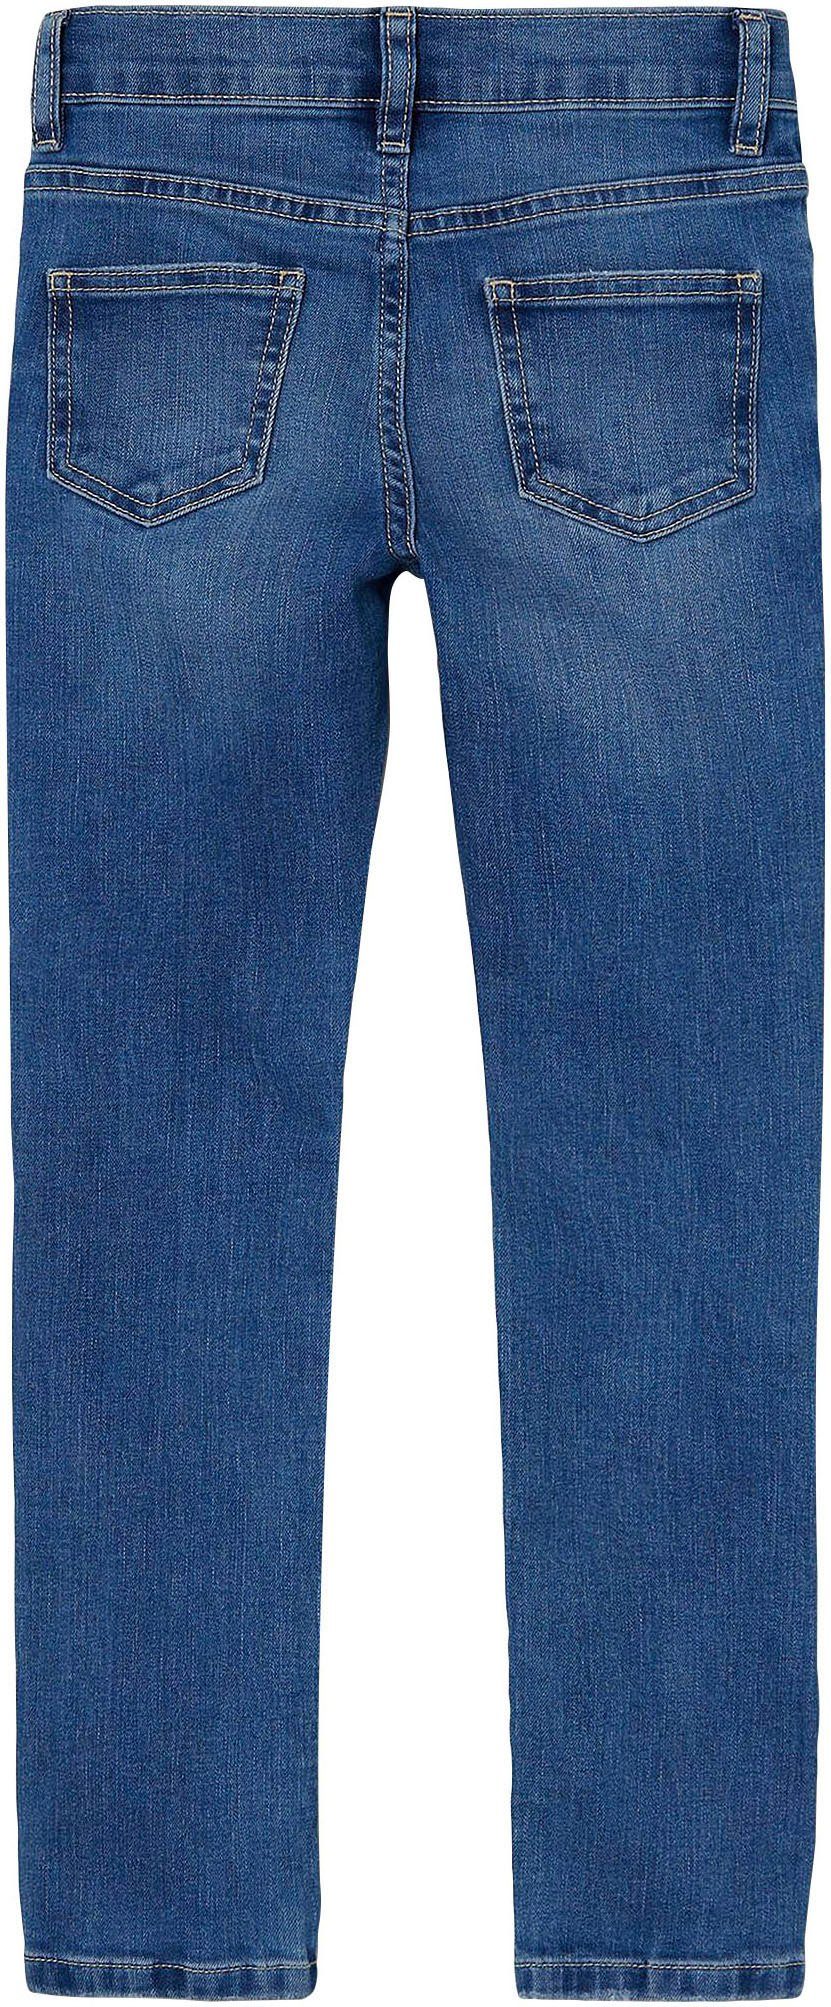 1114-MT medium Destroyed SLIM It NOOS mit NKFSALLI Effekt Slim-fit-Jeans blue denim Name JEANS